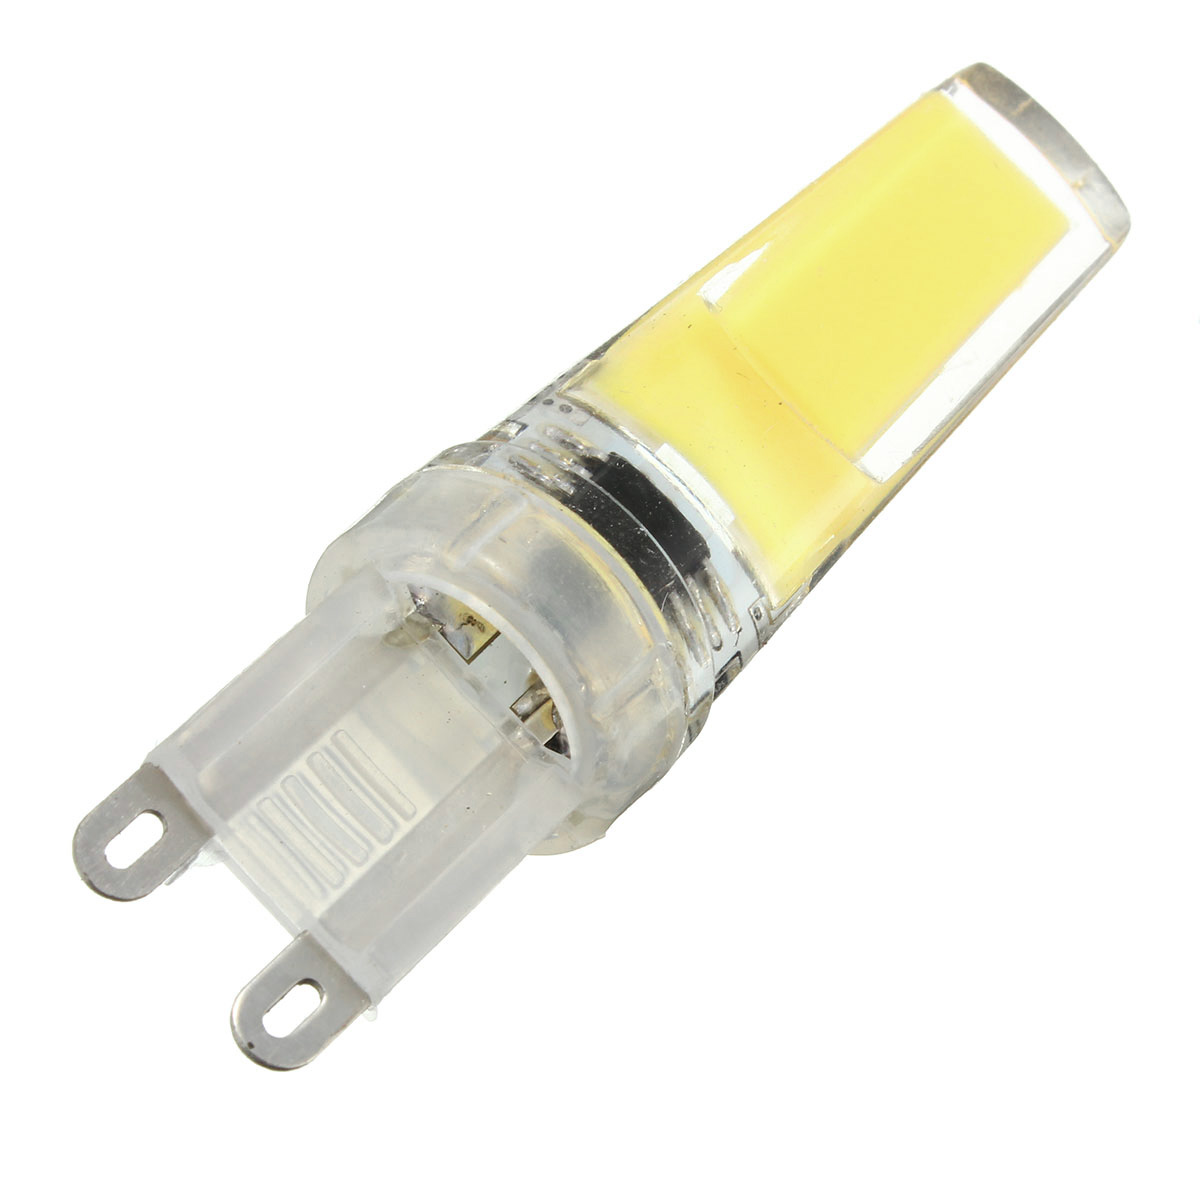 Dimmable-G9-LED-3W-Pure-White-Warm-White-COB-LED-Light-Lamp-Bulb-AC220V-1062193-7